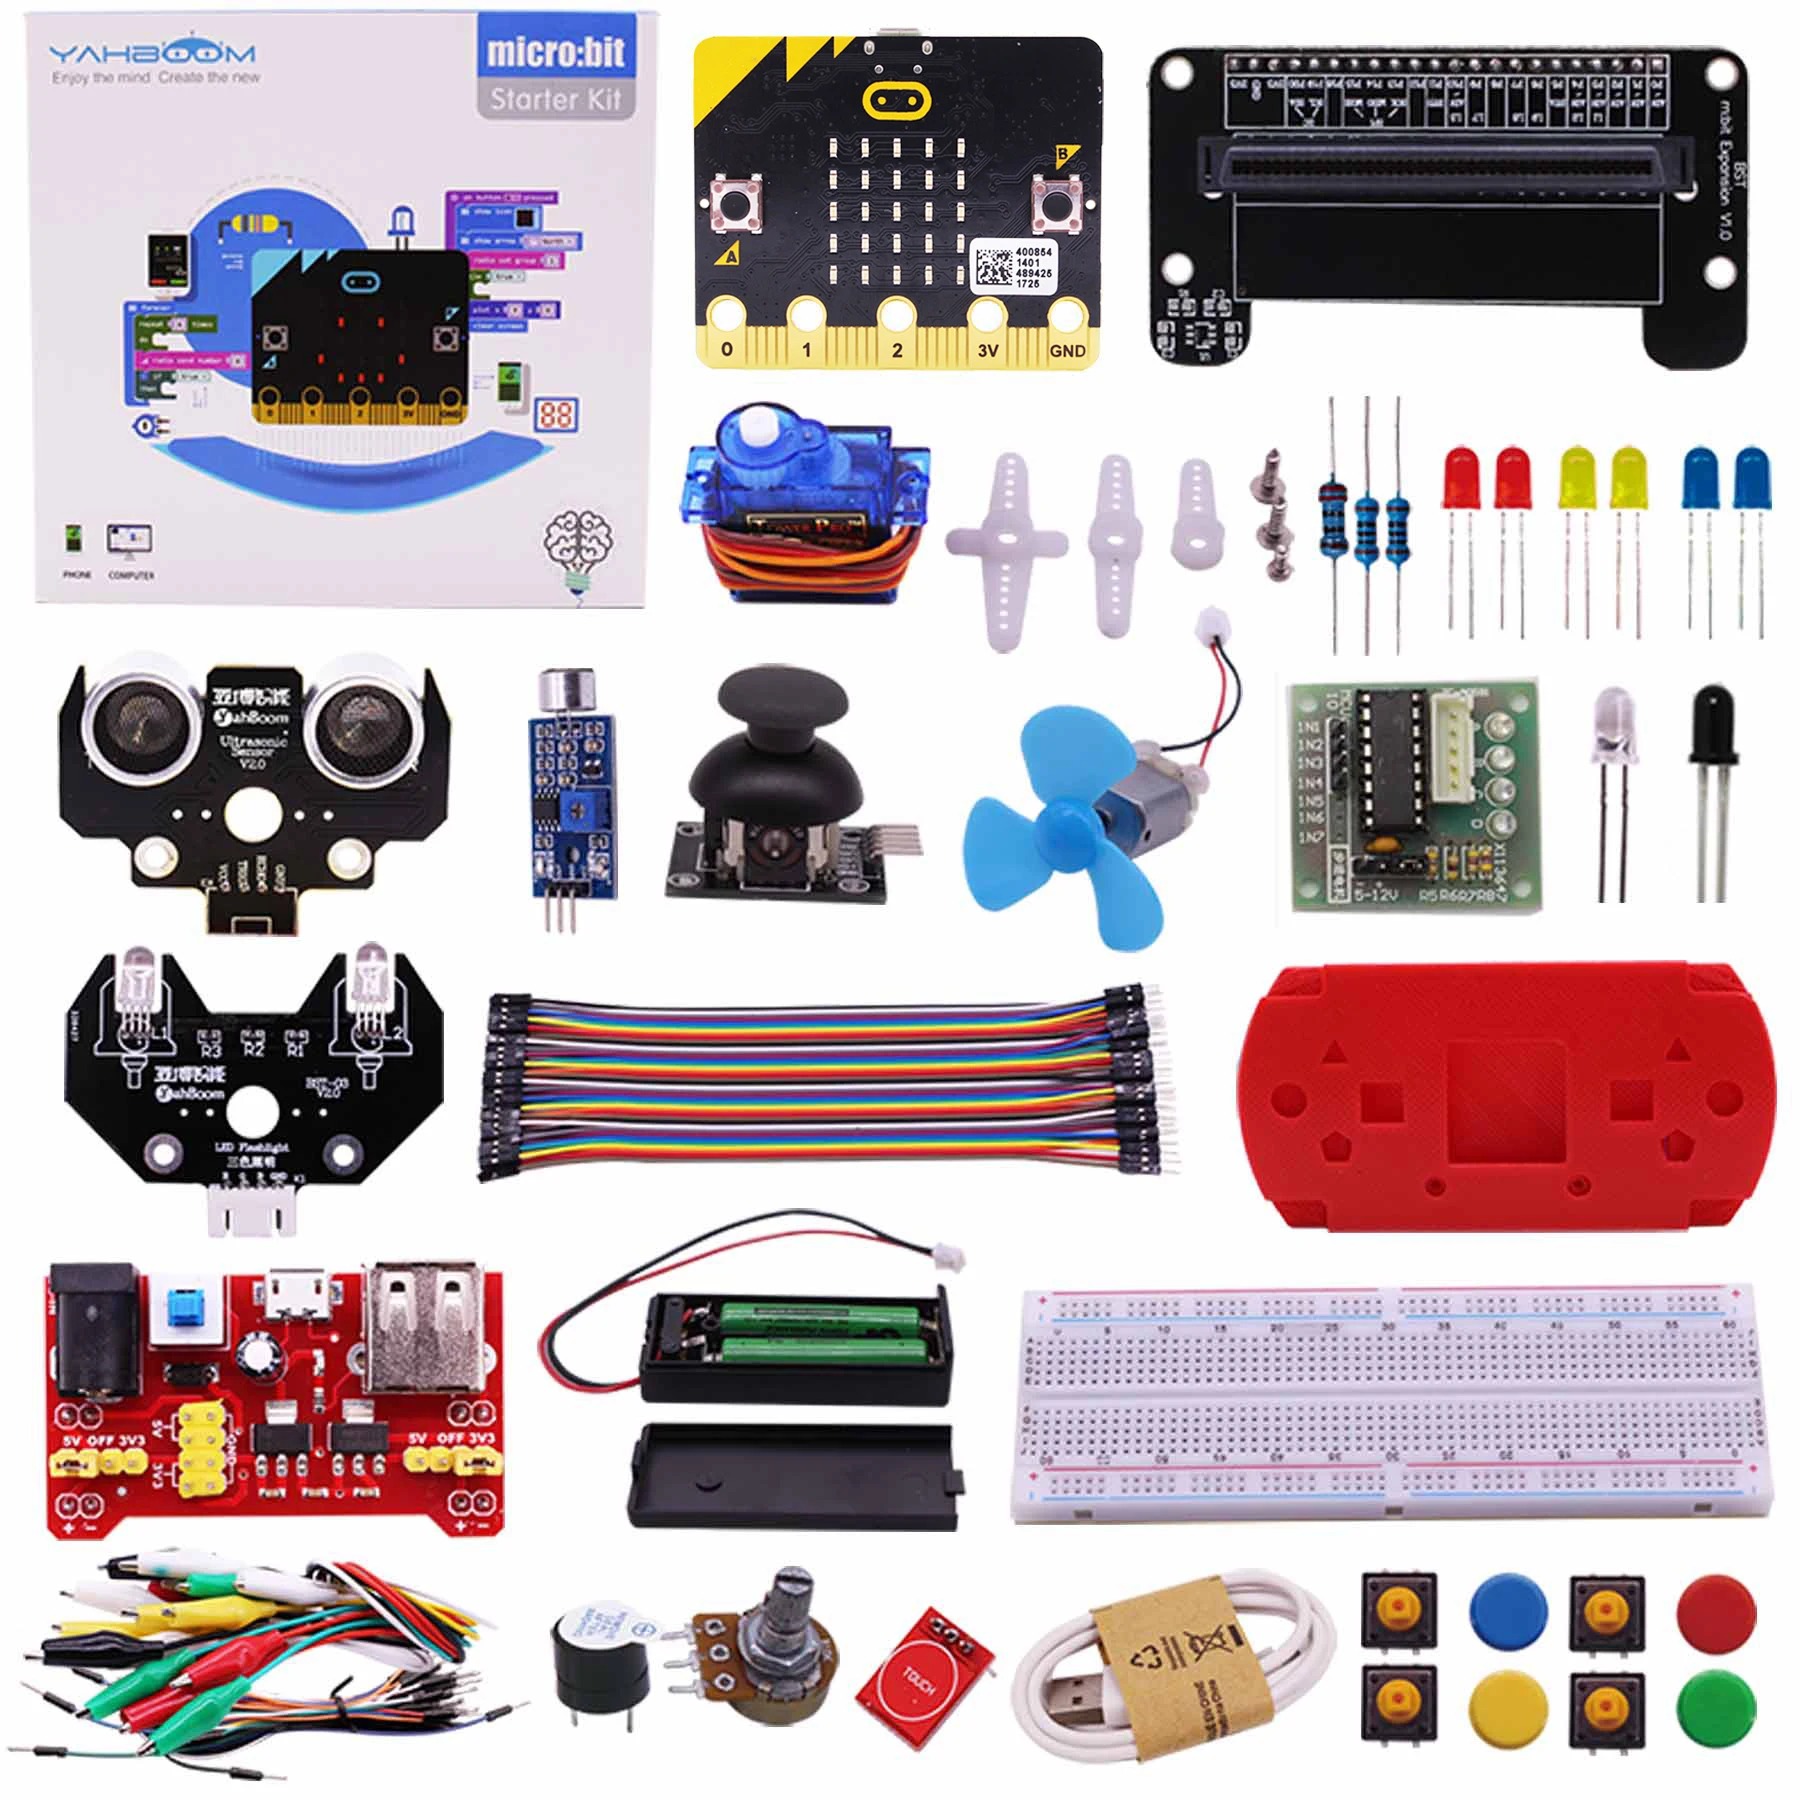 Yahboom Hot Selling Microbit Starter Sensor Kit for Beginner Compatible with V1.5/ V2 Board Robot Programming Toy Kit for Boys